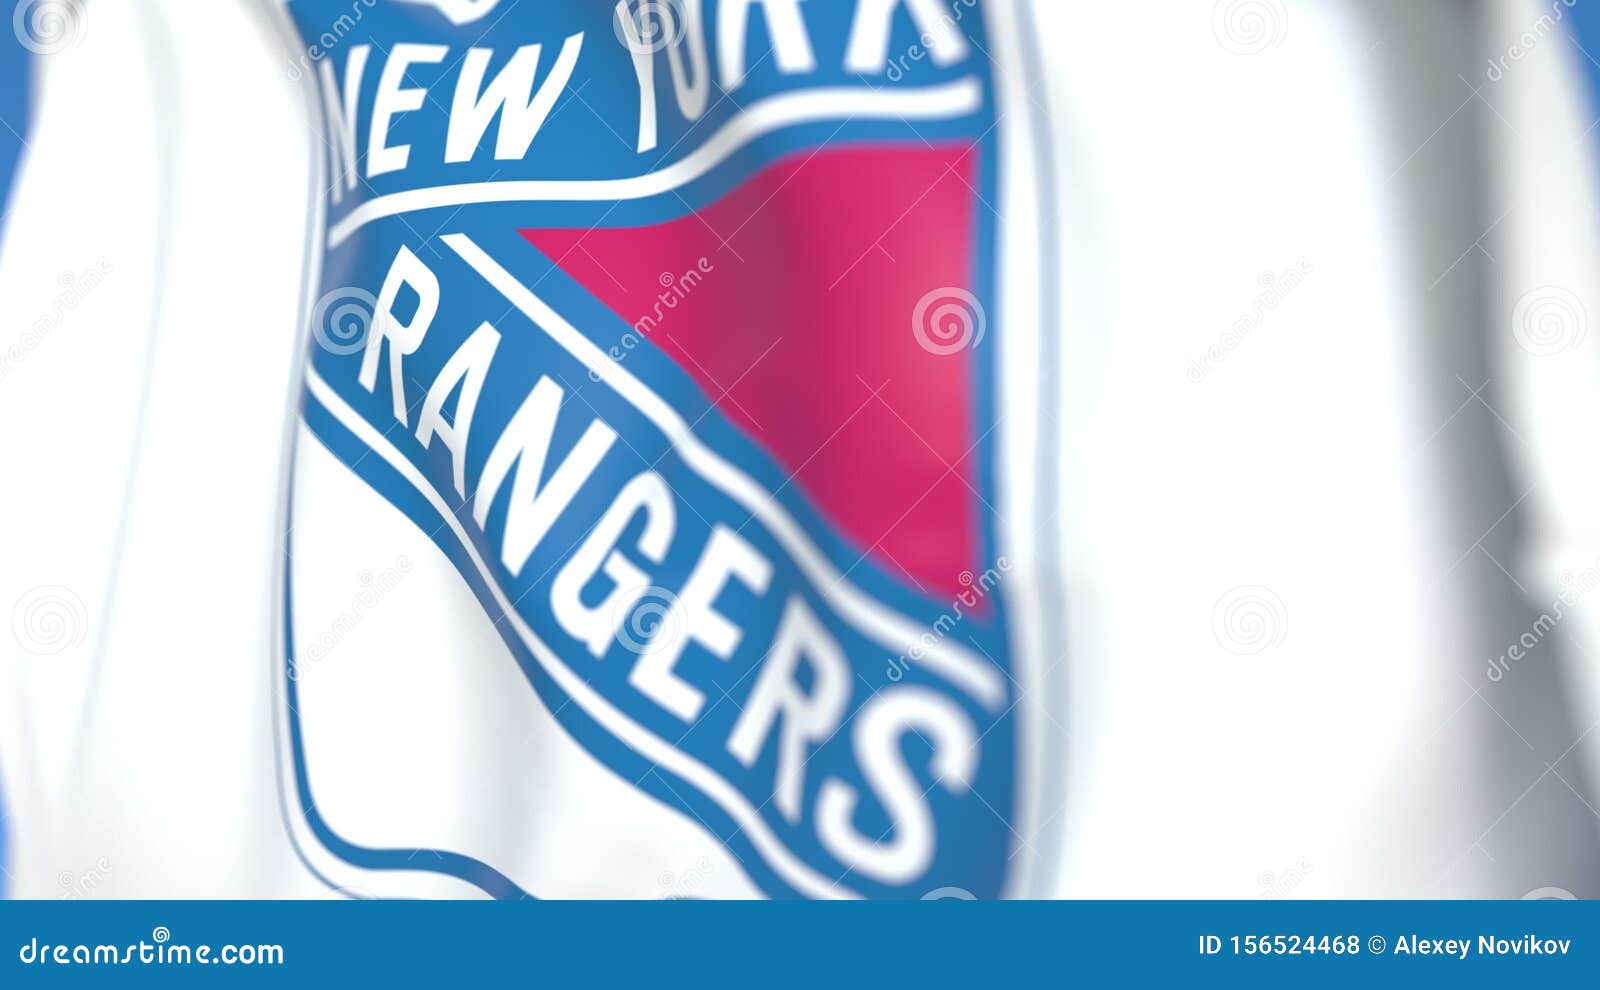 Download New York Rangers Graphic Art Wallpaper